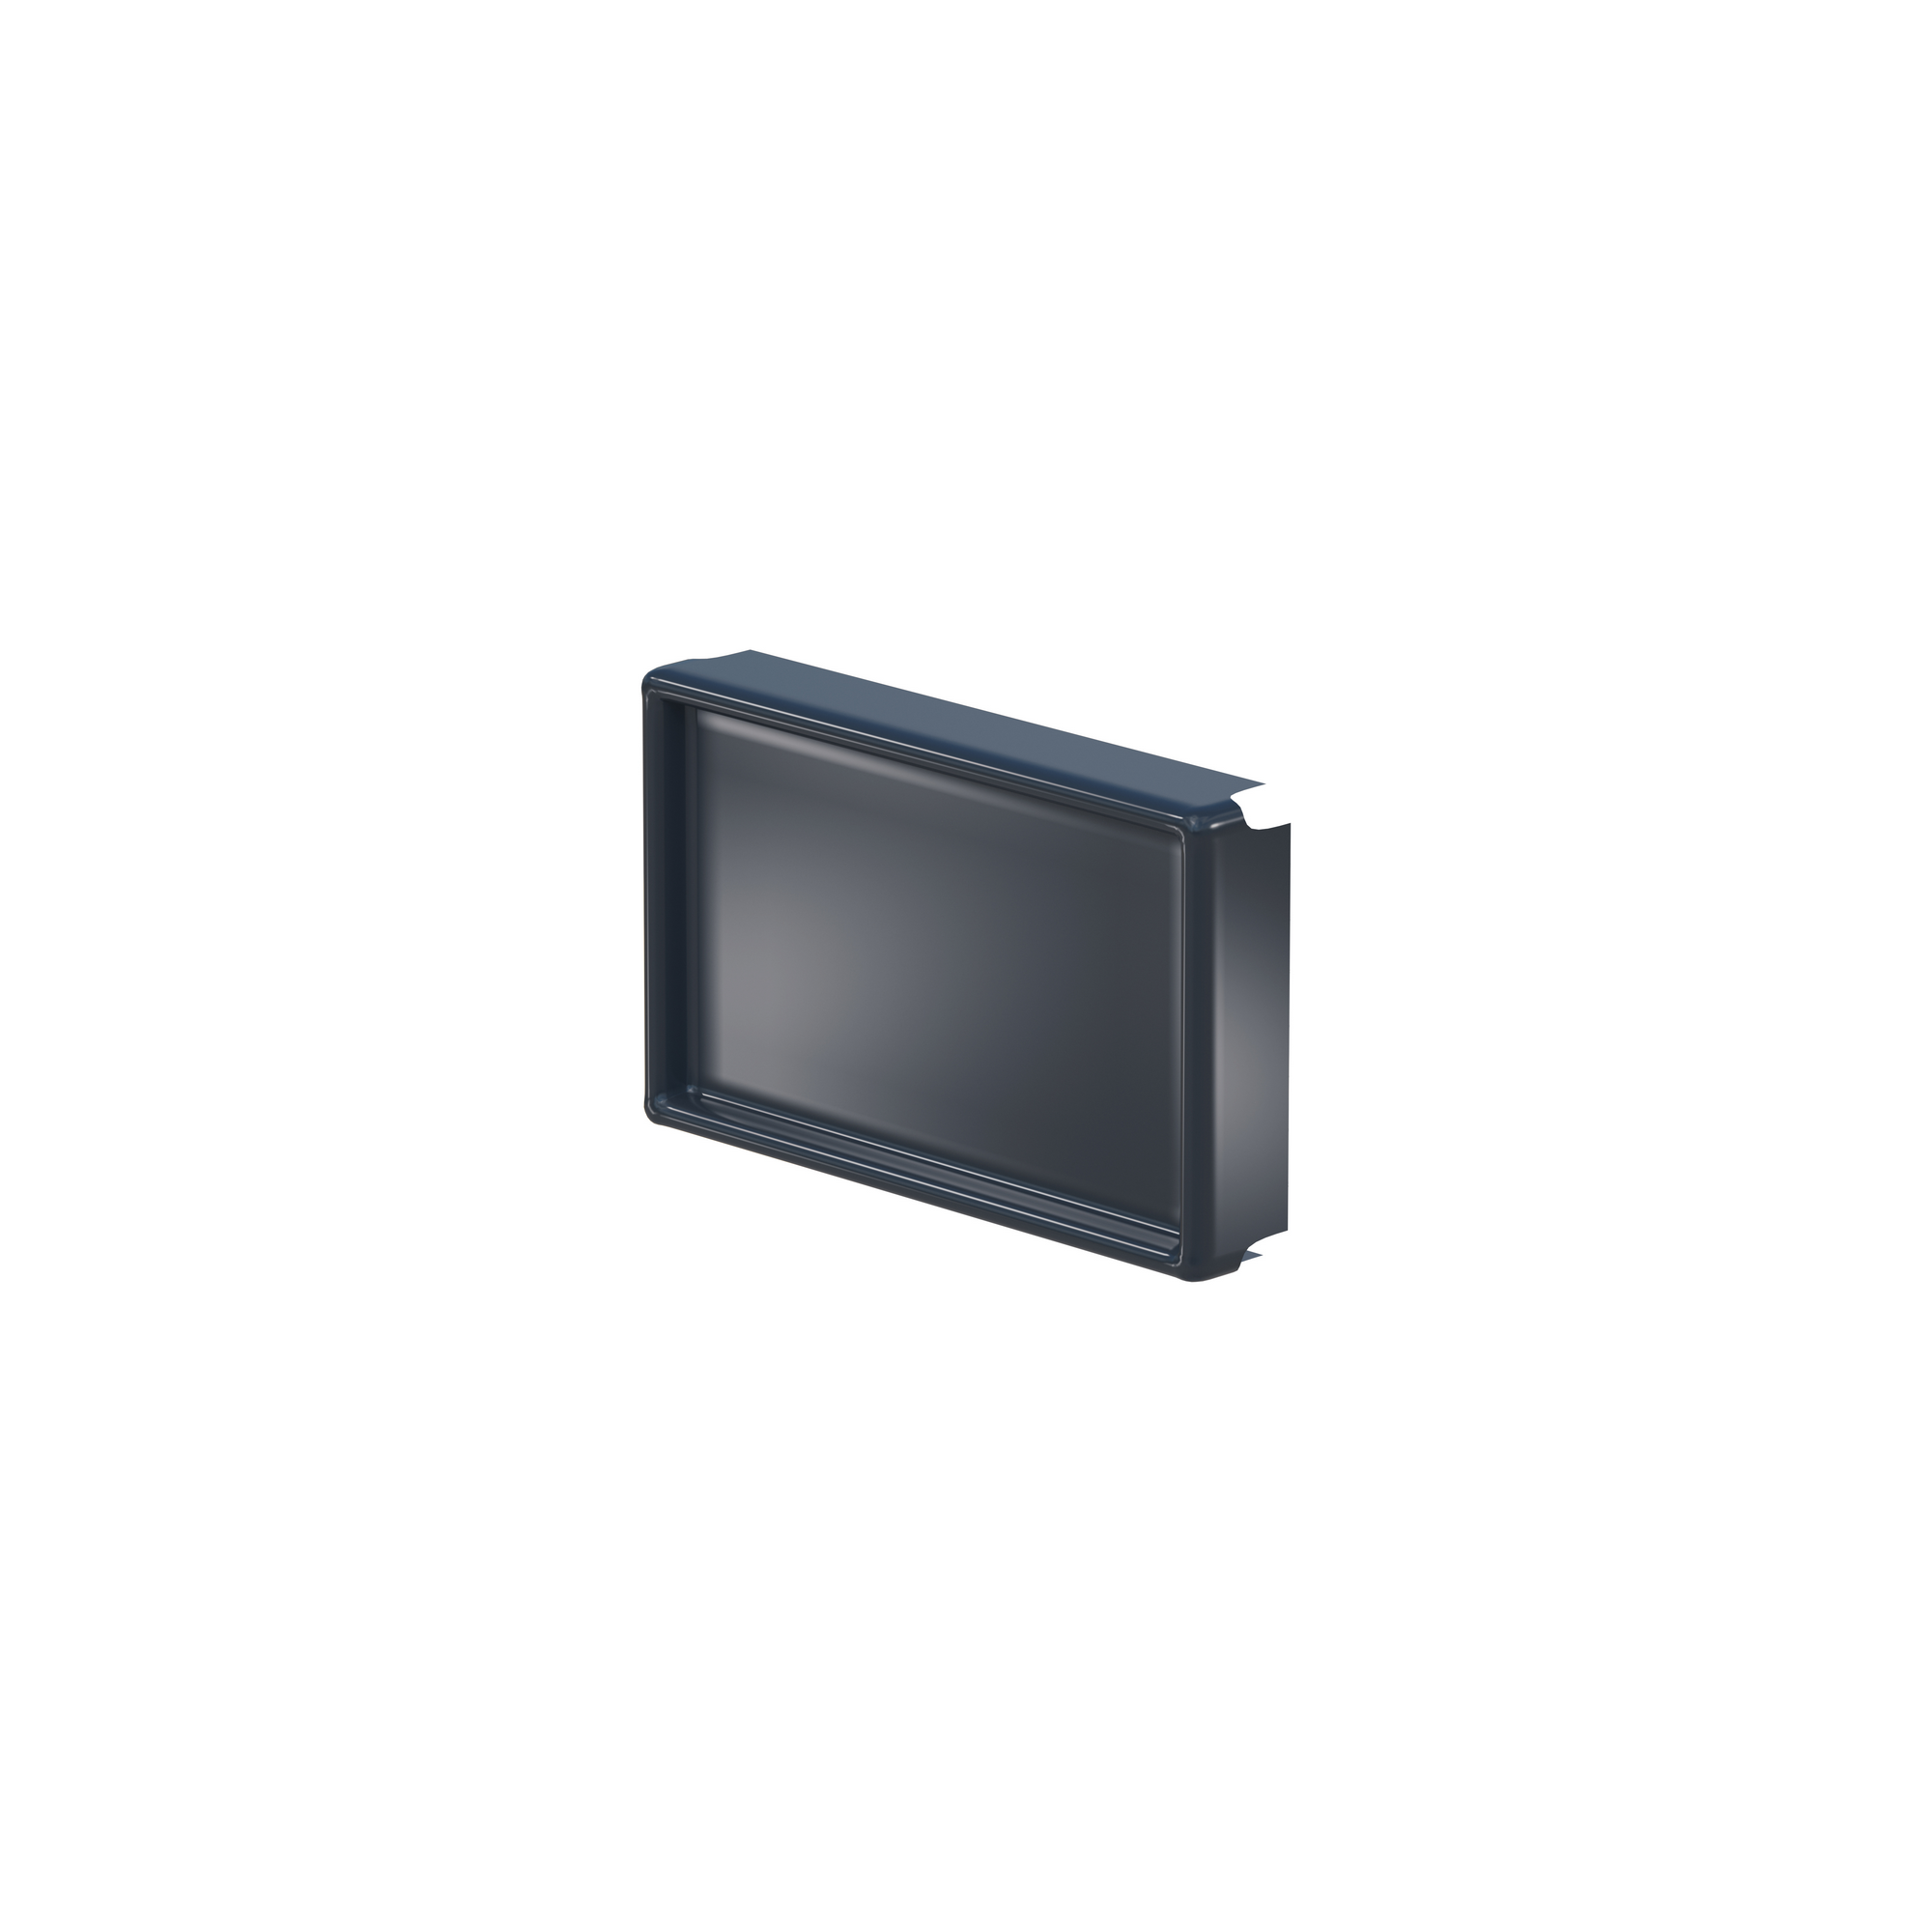 Enddeckel für SDF-Kastenrinne 'Piccolo' anthrazit RG 70 + product video